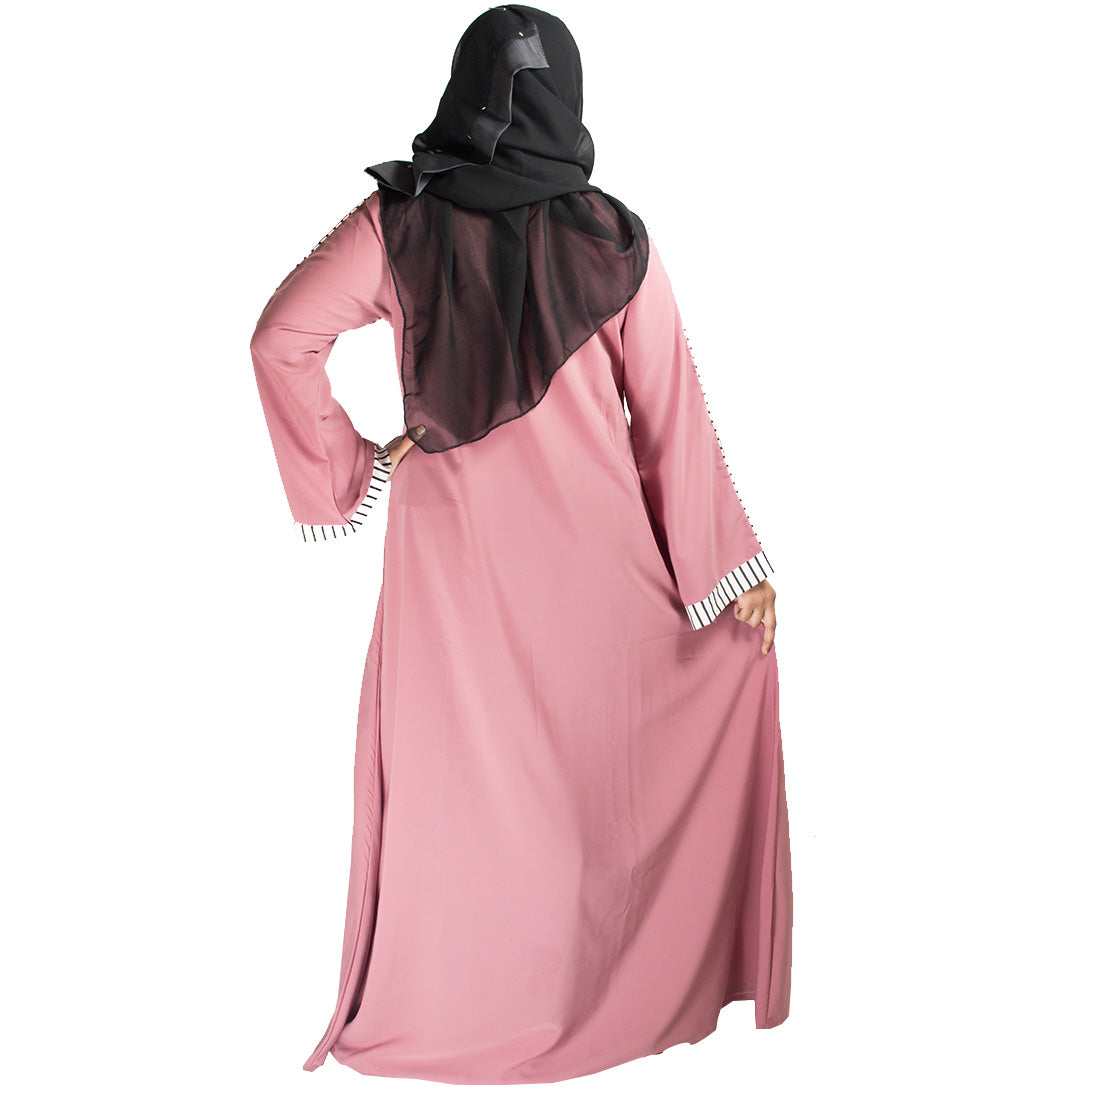 Beautiful Self Design Pink Shrug Crepe Abaya Without Hijab